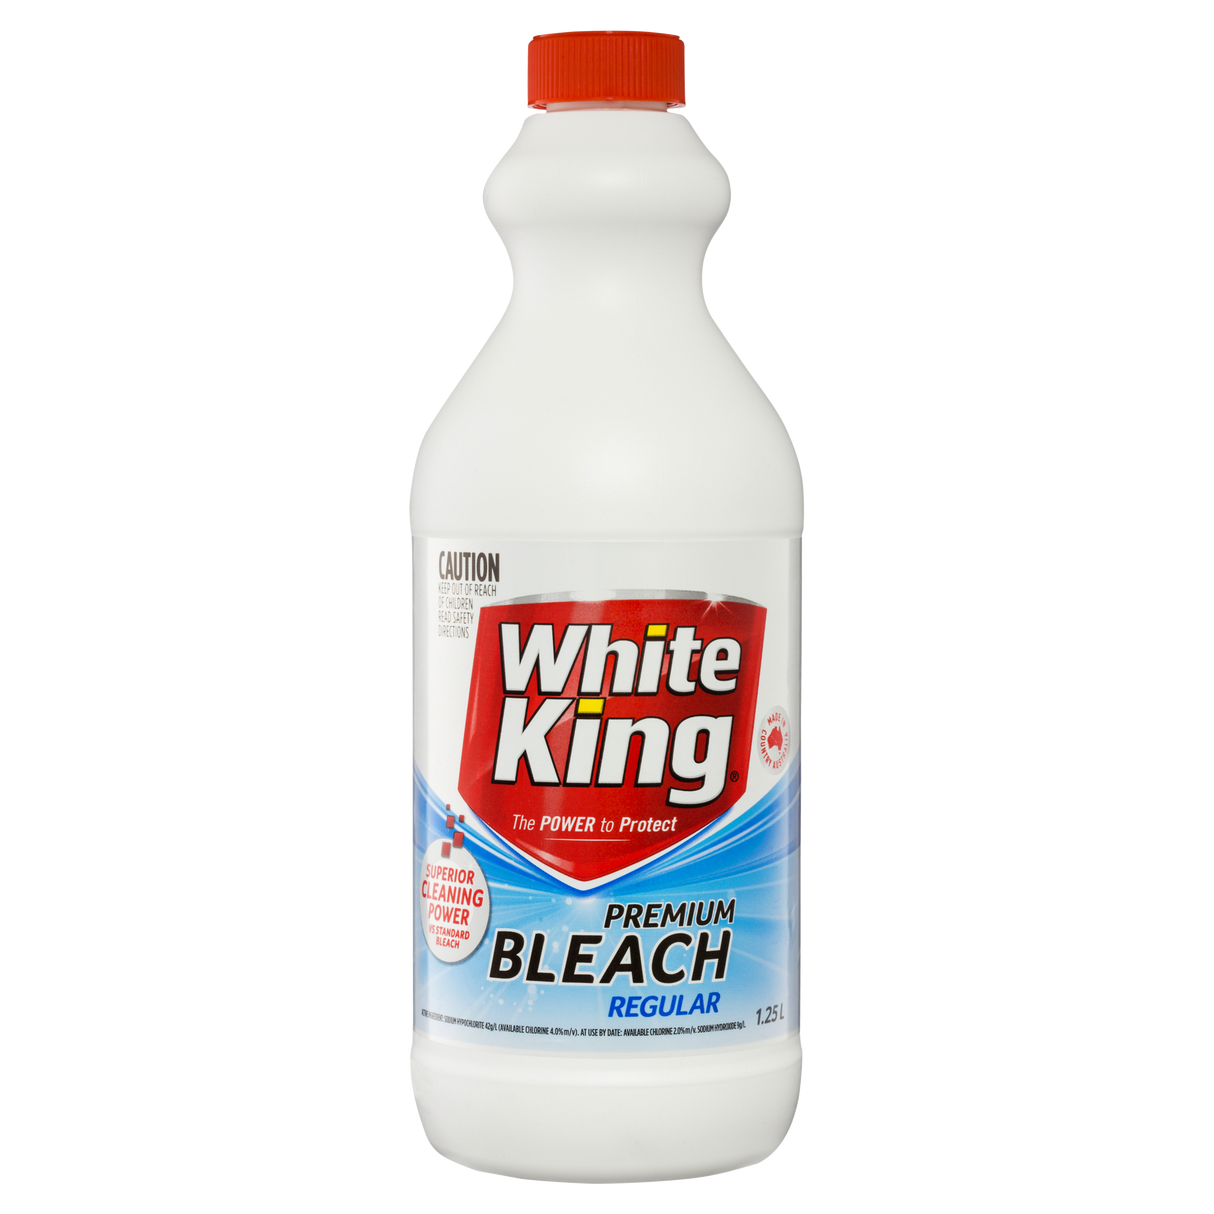 White King Premium Bleach Regular 1.25l